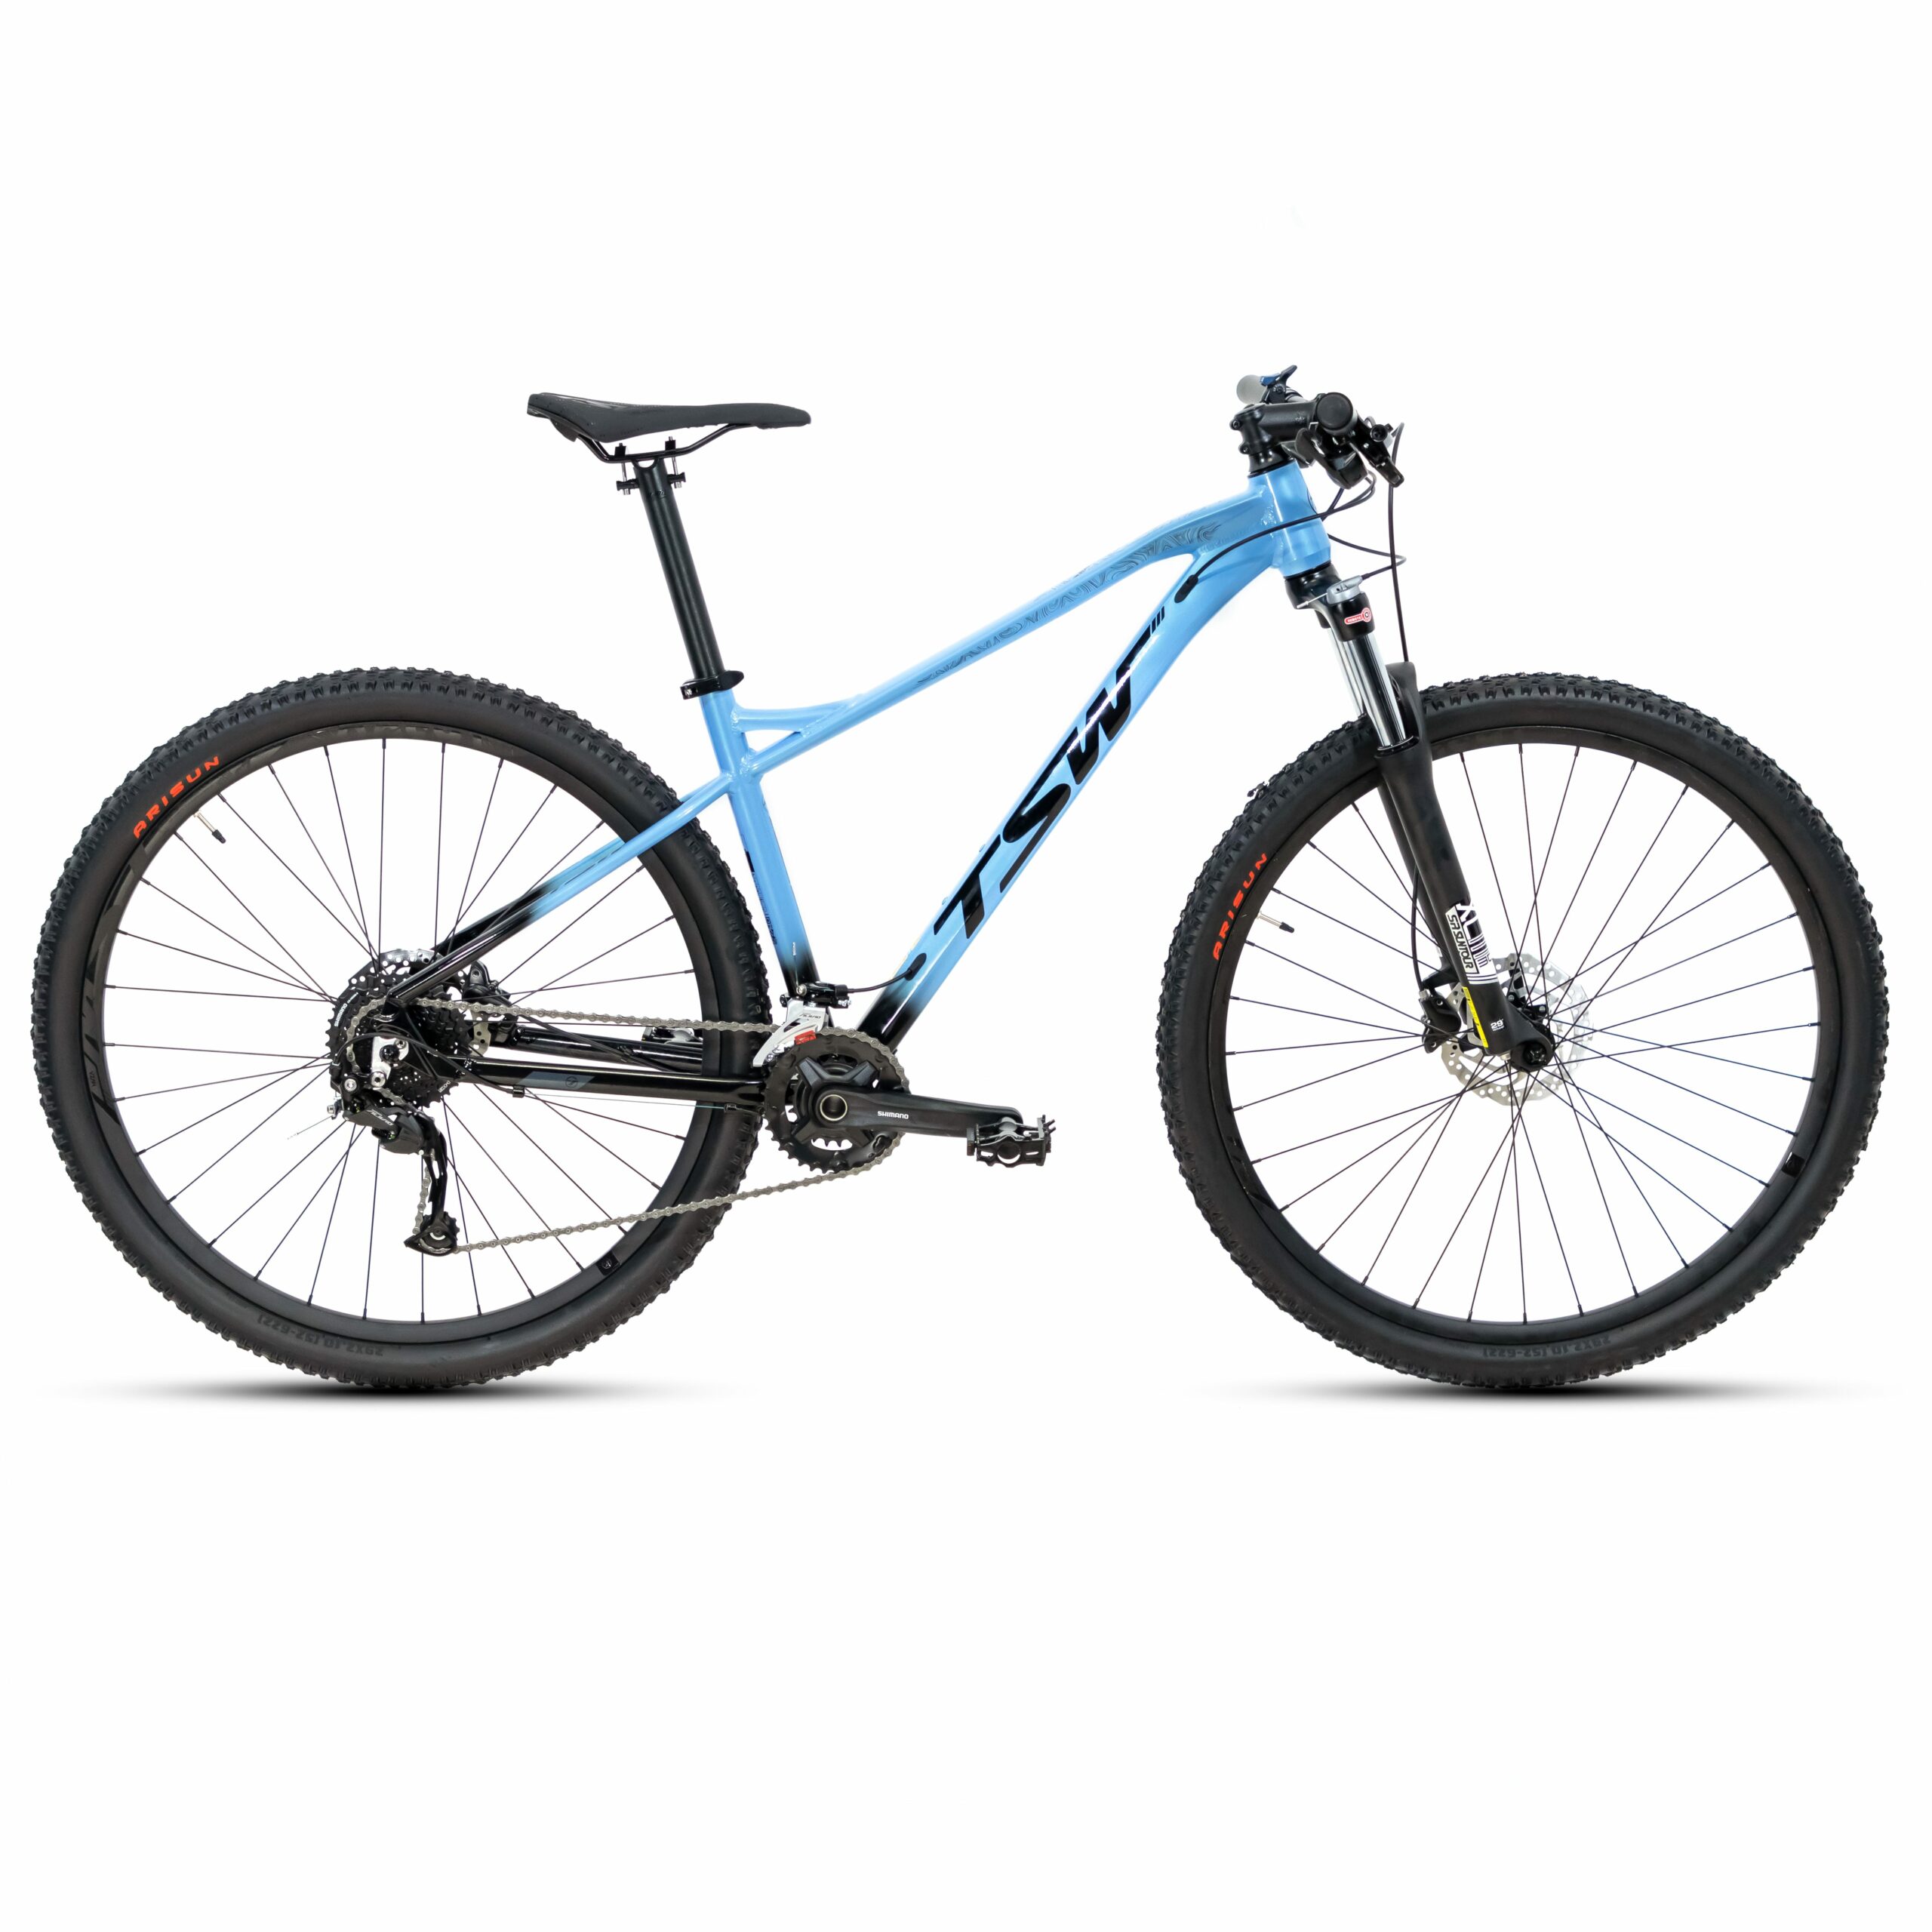 Bicicleta TSW Stamina | 2021/2022 - 19", Azul Claro/Preto